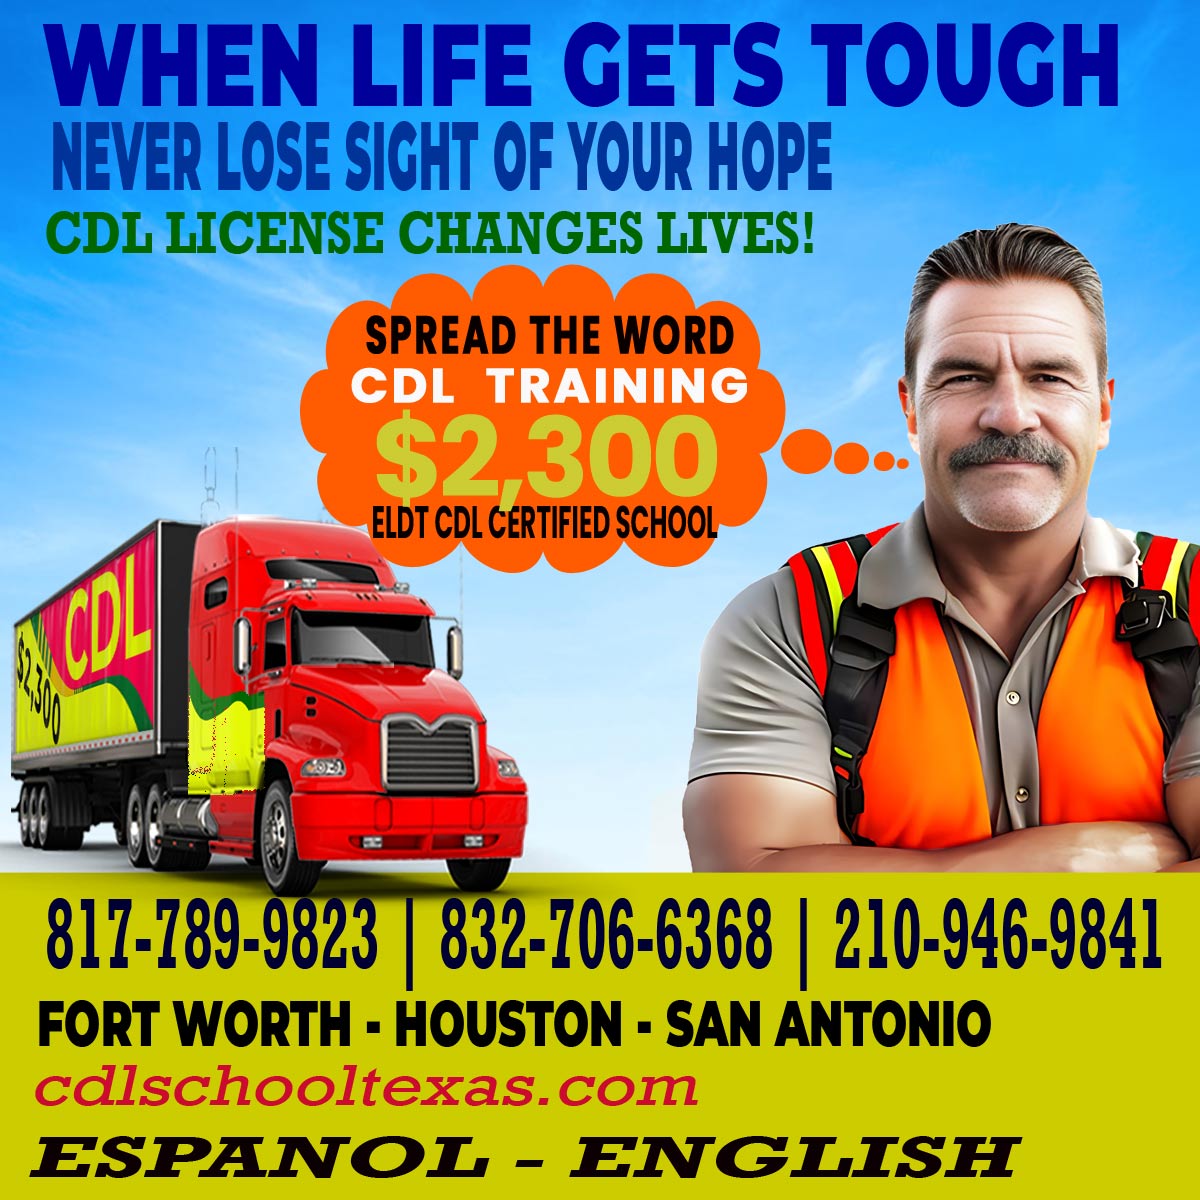 CDL School San Antonio: Image show  Phones, Motivational Message, Location, URL, training languages